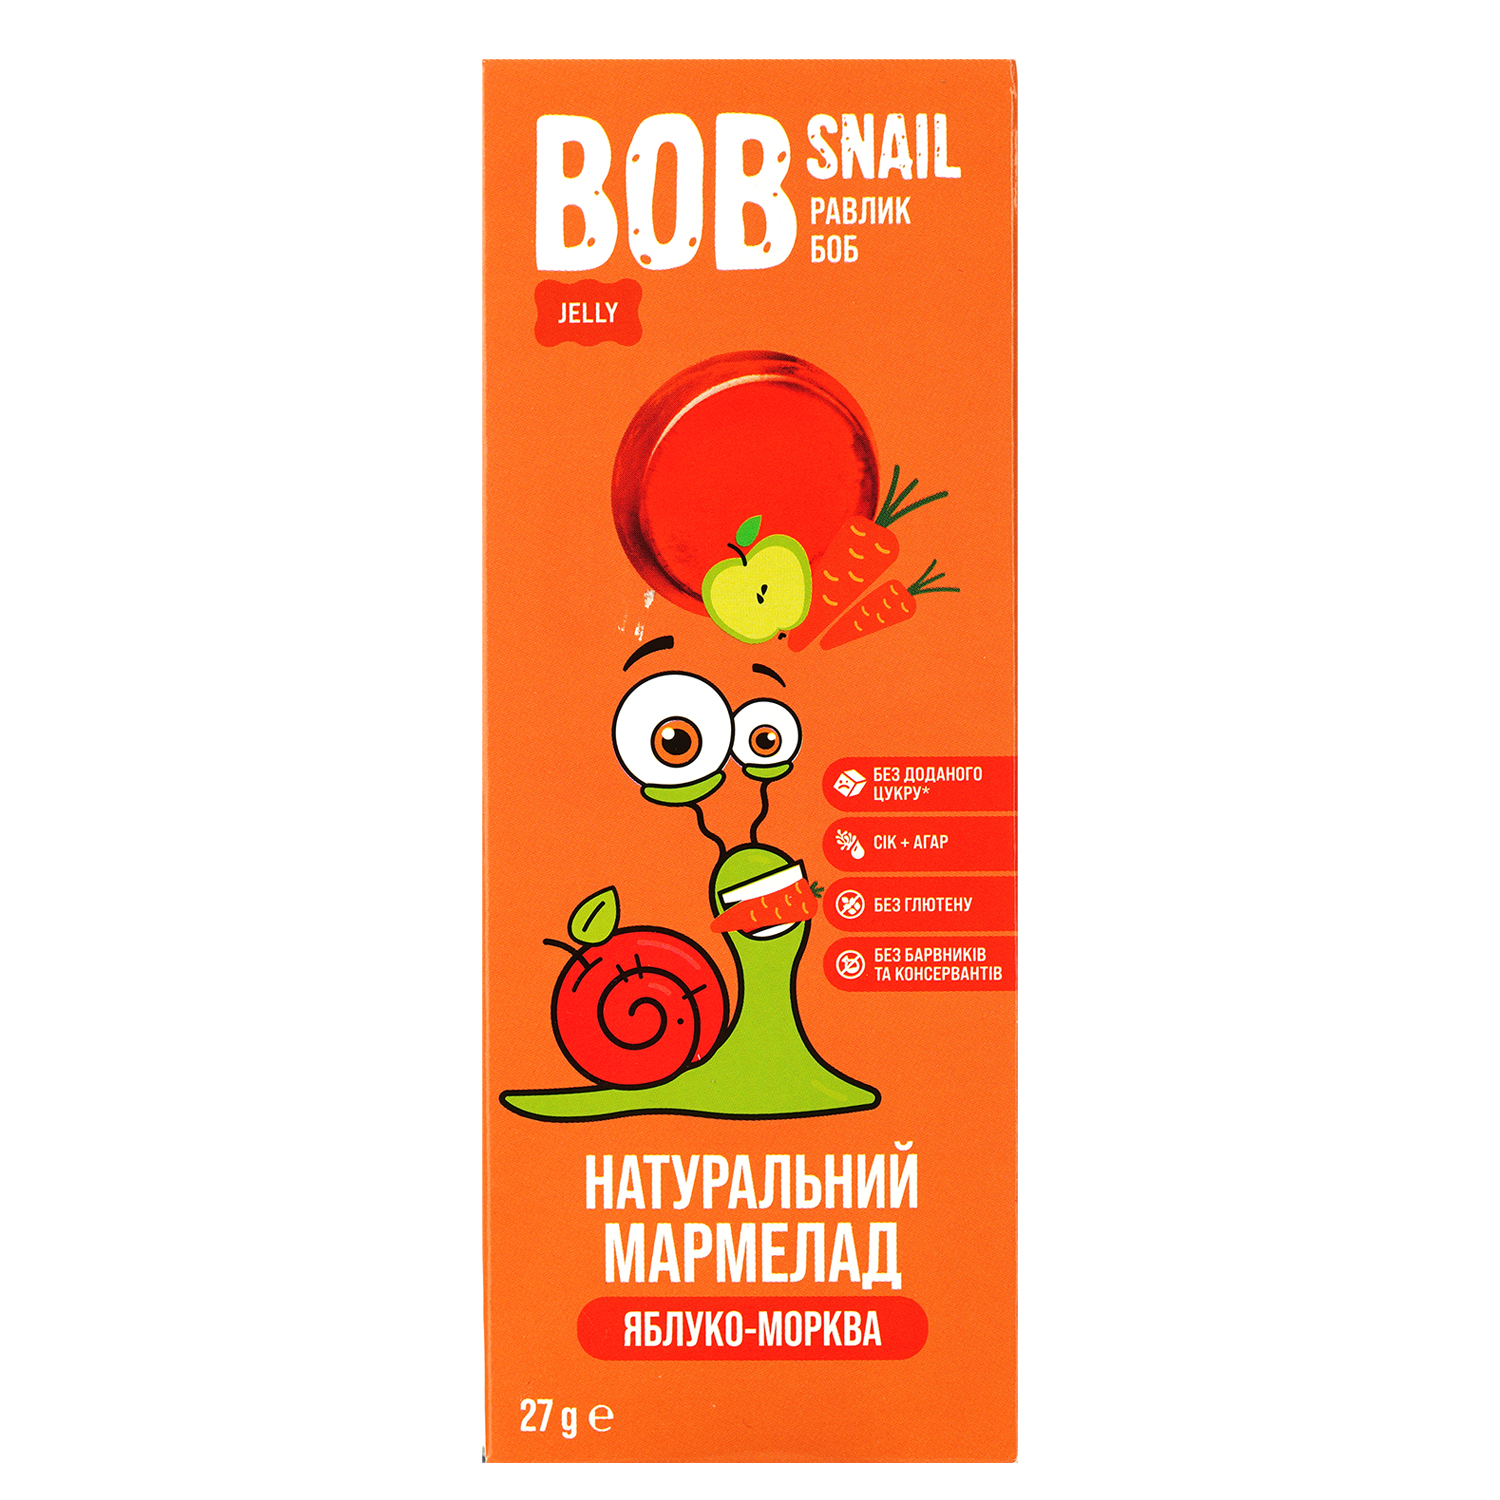 Фруктово-овощной мармелад Bob Snail Яблоко-Морковь 27 г - фото 1